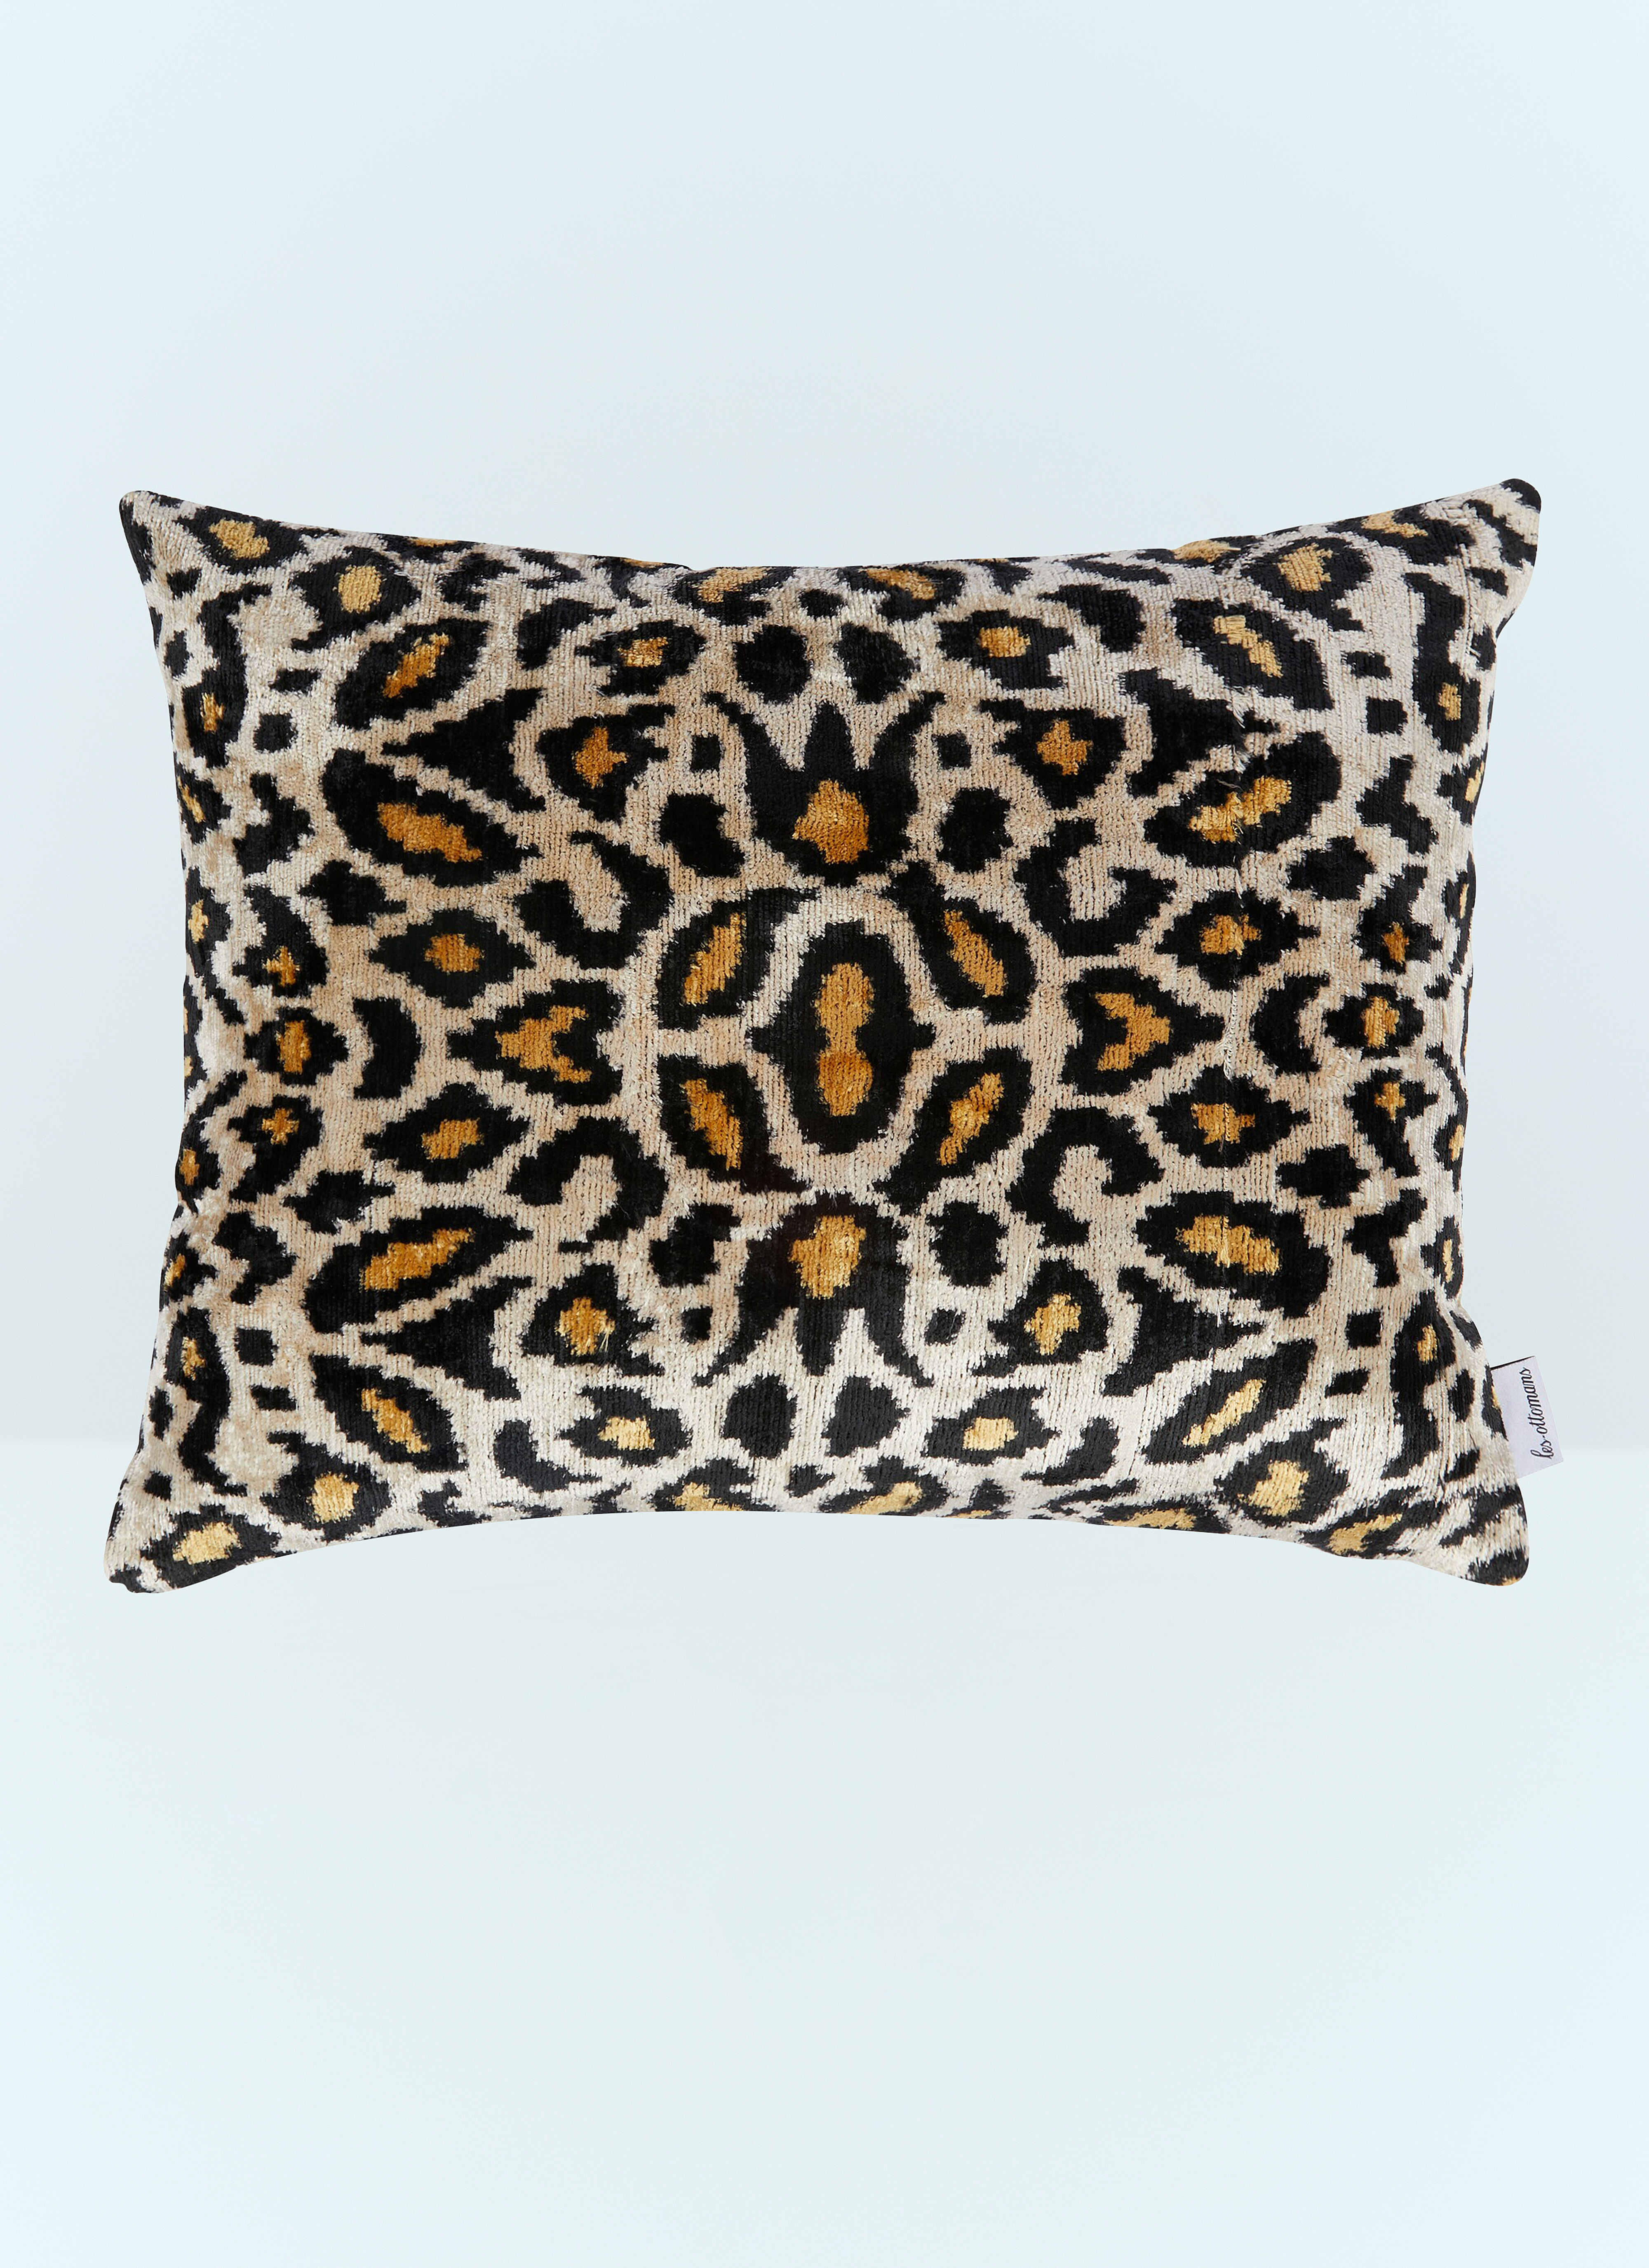 Les Ottomans Leopard Print Velvet Cushion Silver wps0691103